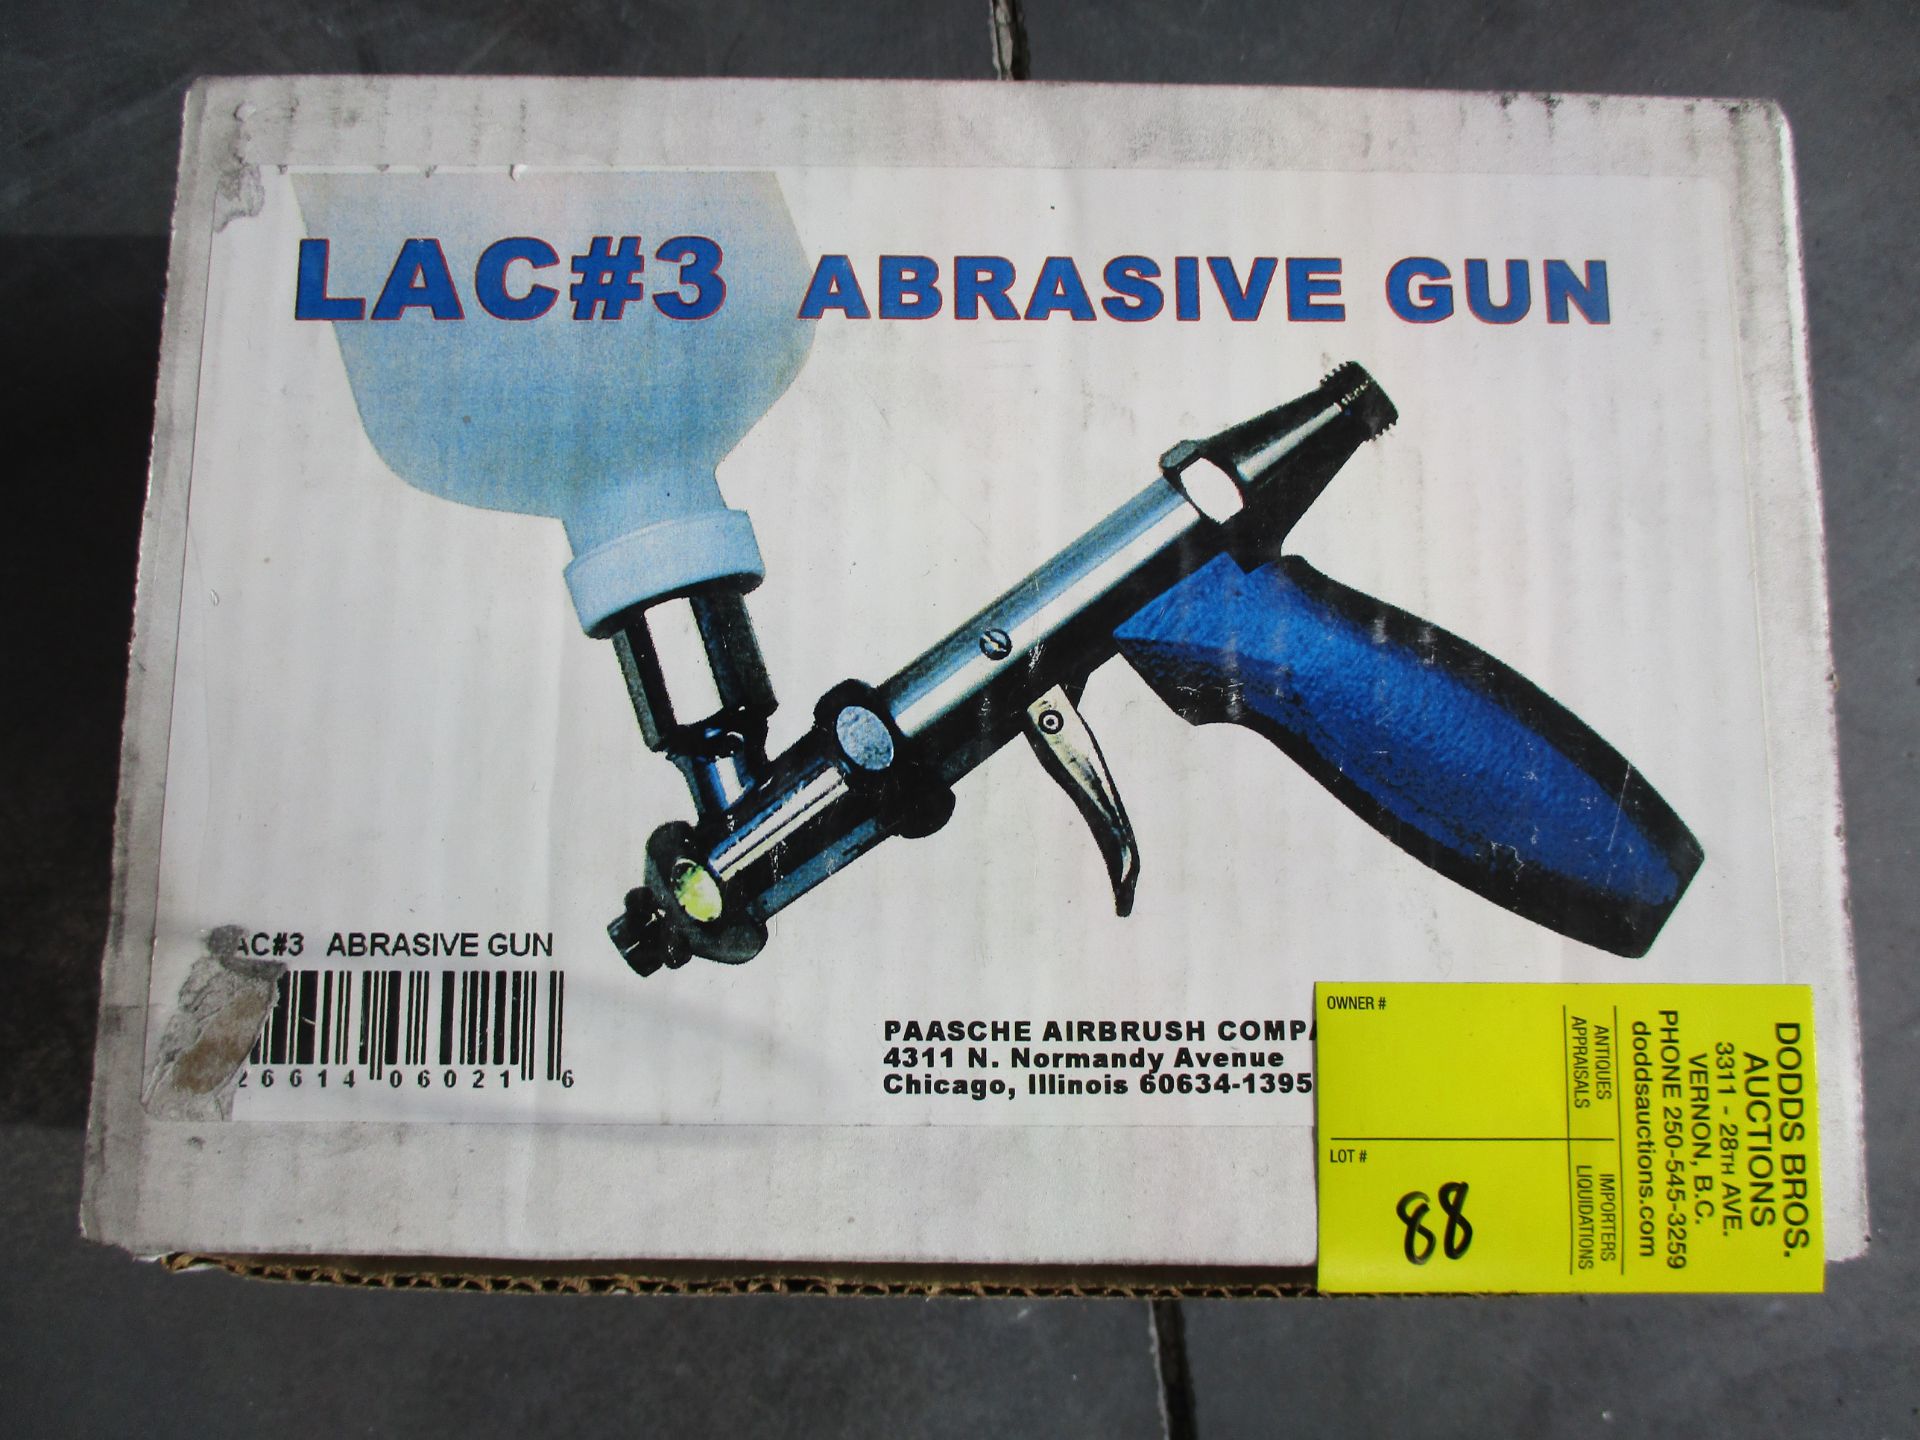 Paasche - LAC #3 Abrasive Gun